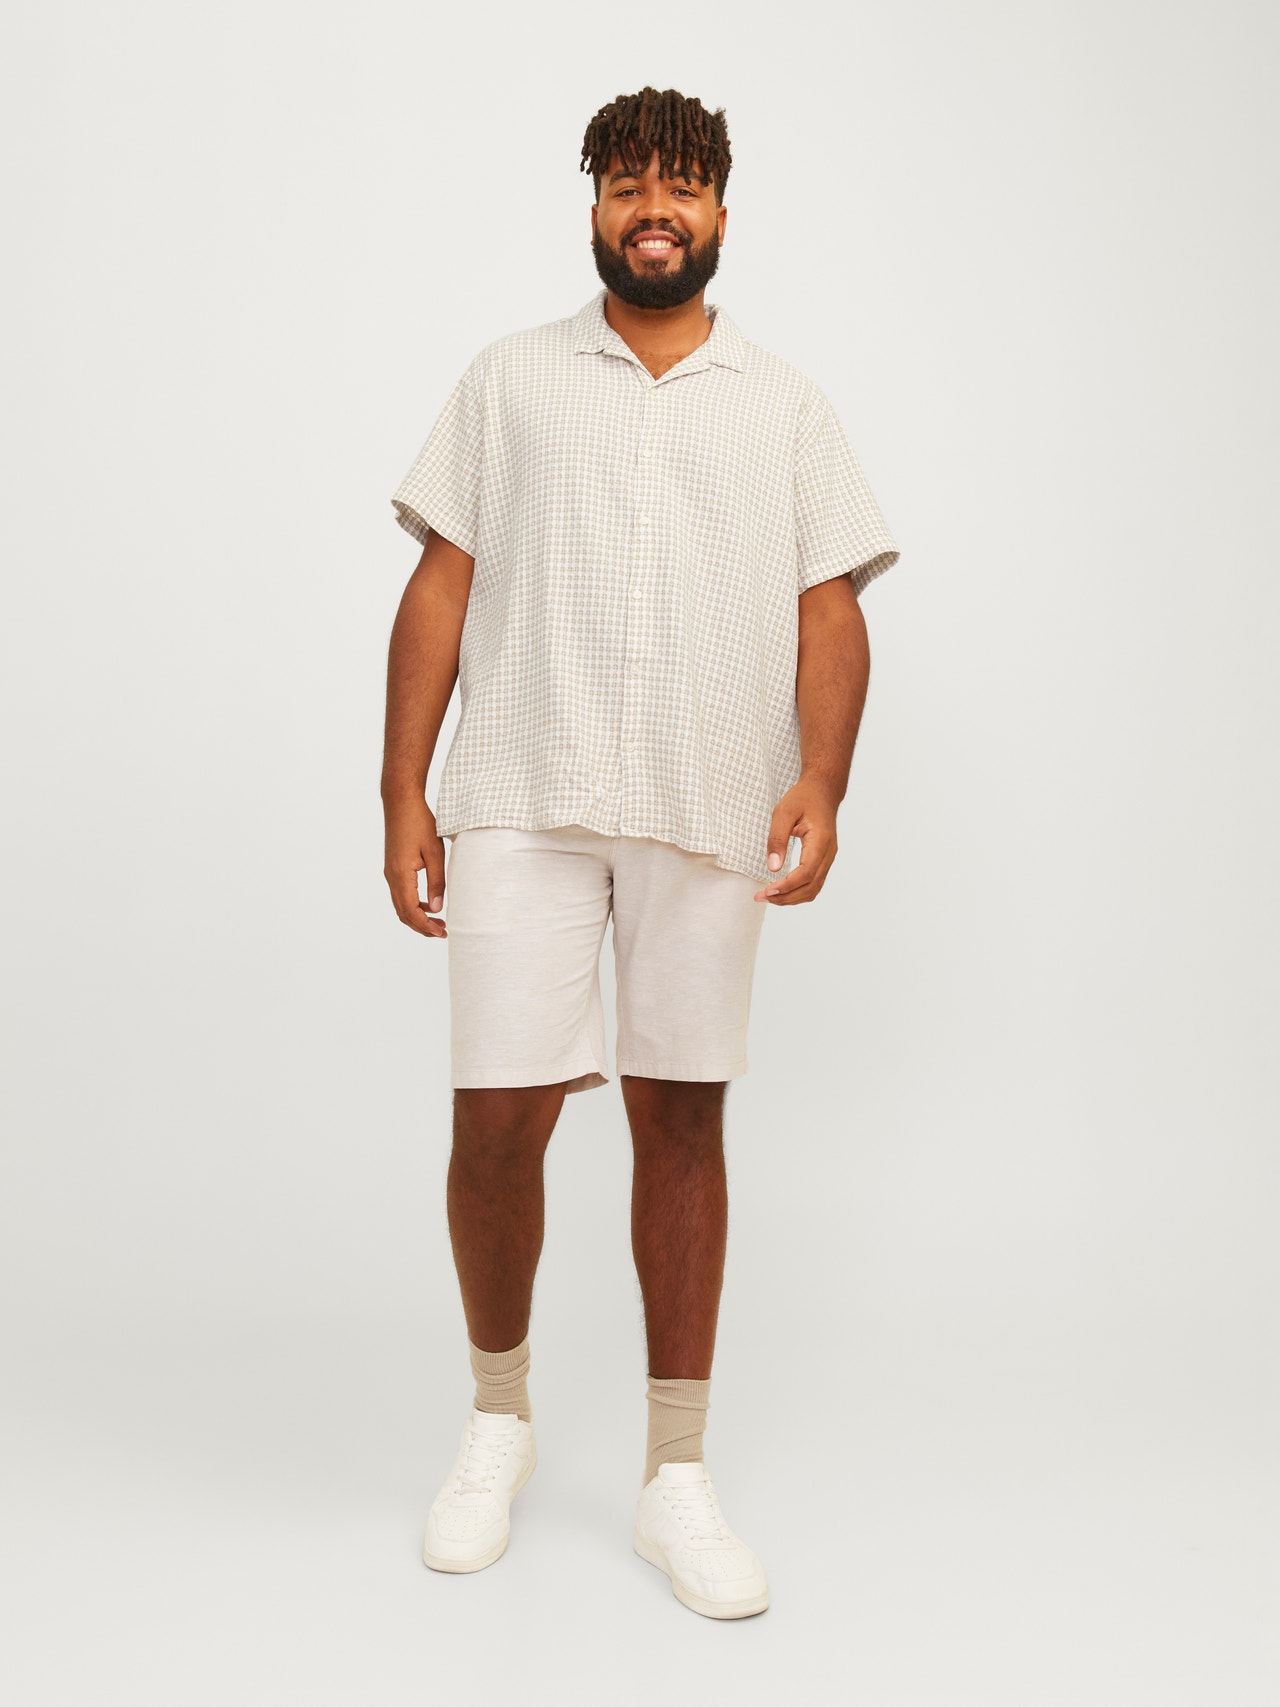 Jack & Jones Plus Size Comfort Fit Shirt -Fields Of Rye - 12261530